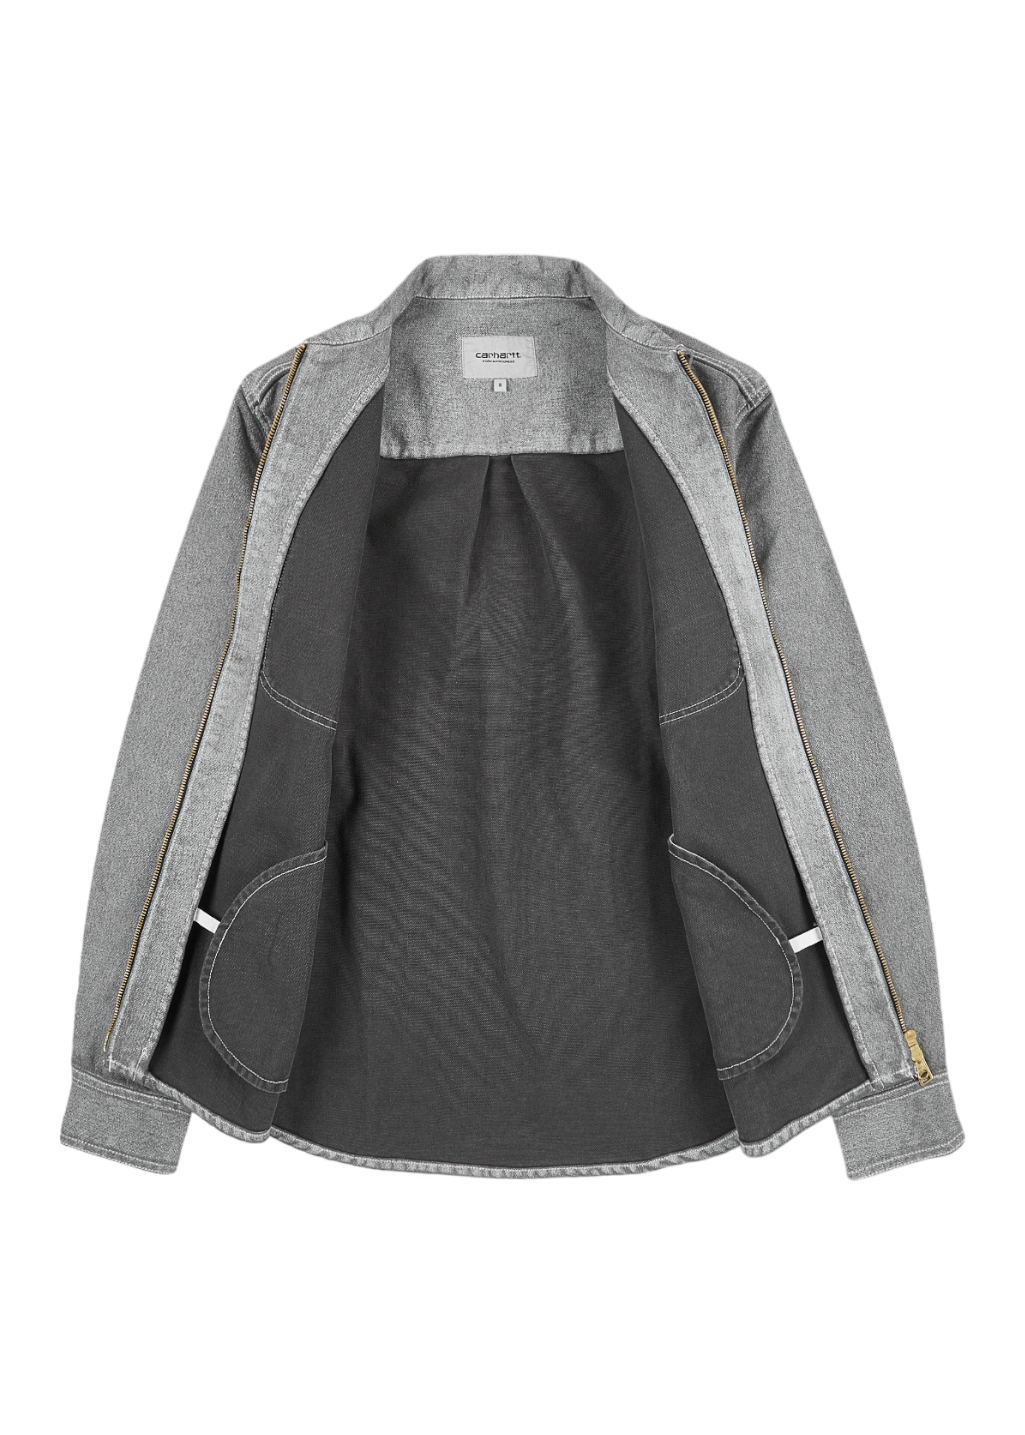 Carhartt WIP - Garen Shirt Jacket - Wax/Blacksmith Stone Washed